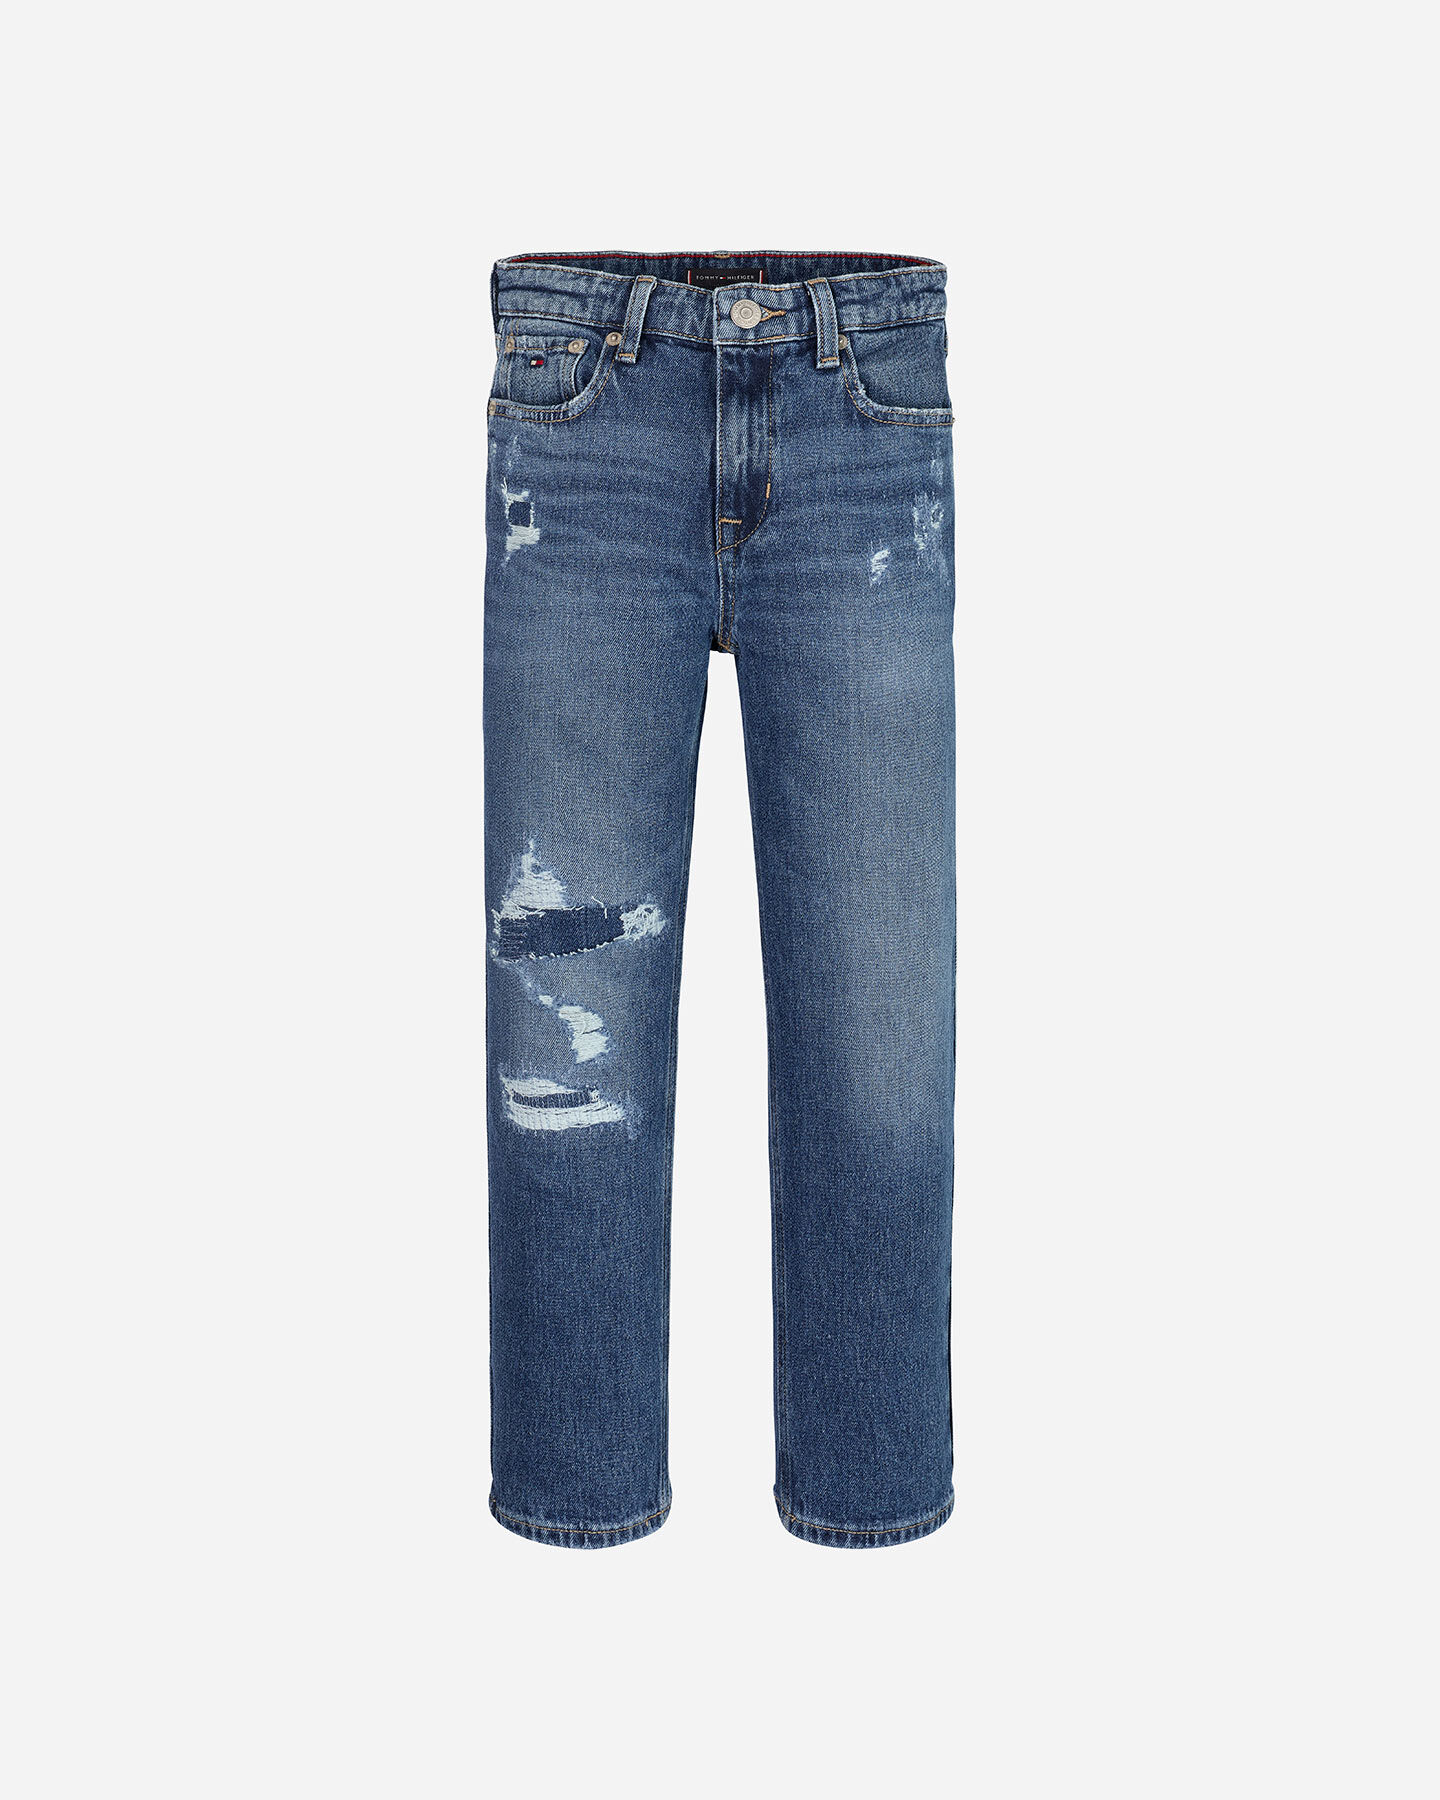  Jeans TOMMY HILFIGER SKATER ROTTUREID JR S4126707|1A5|10A scatto 0